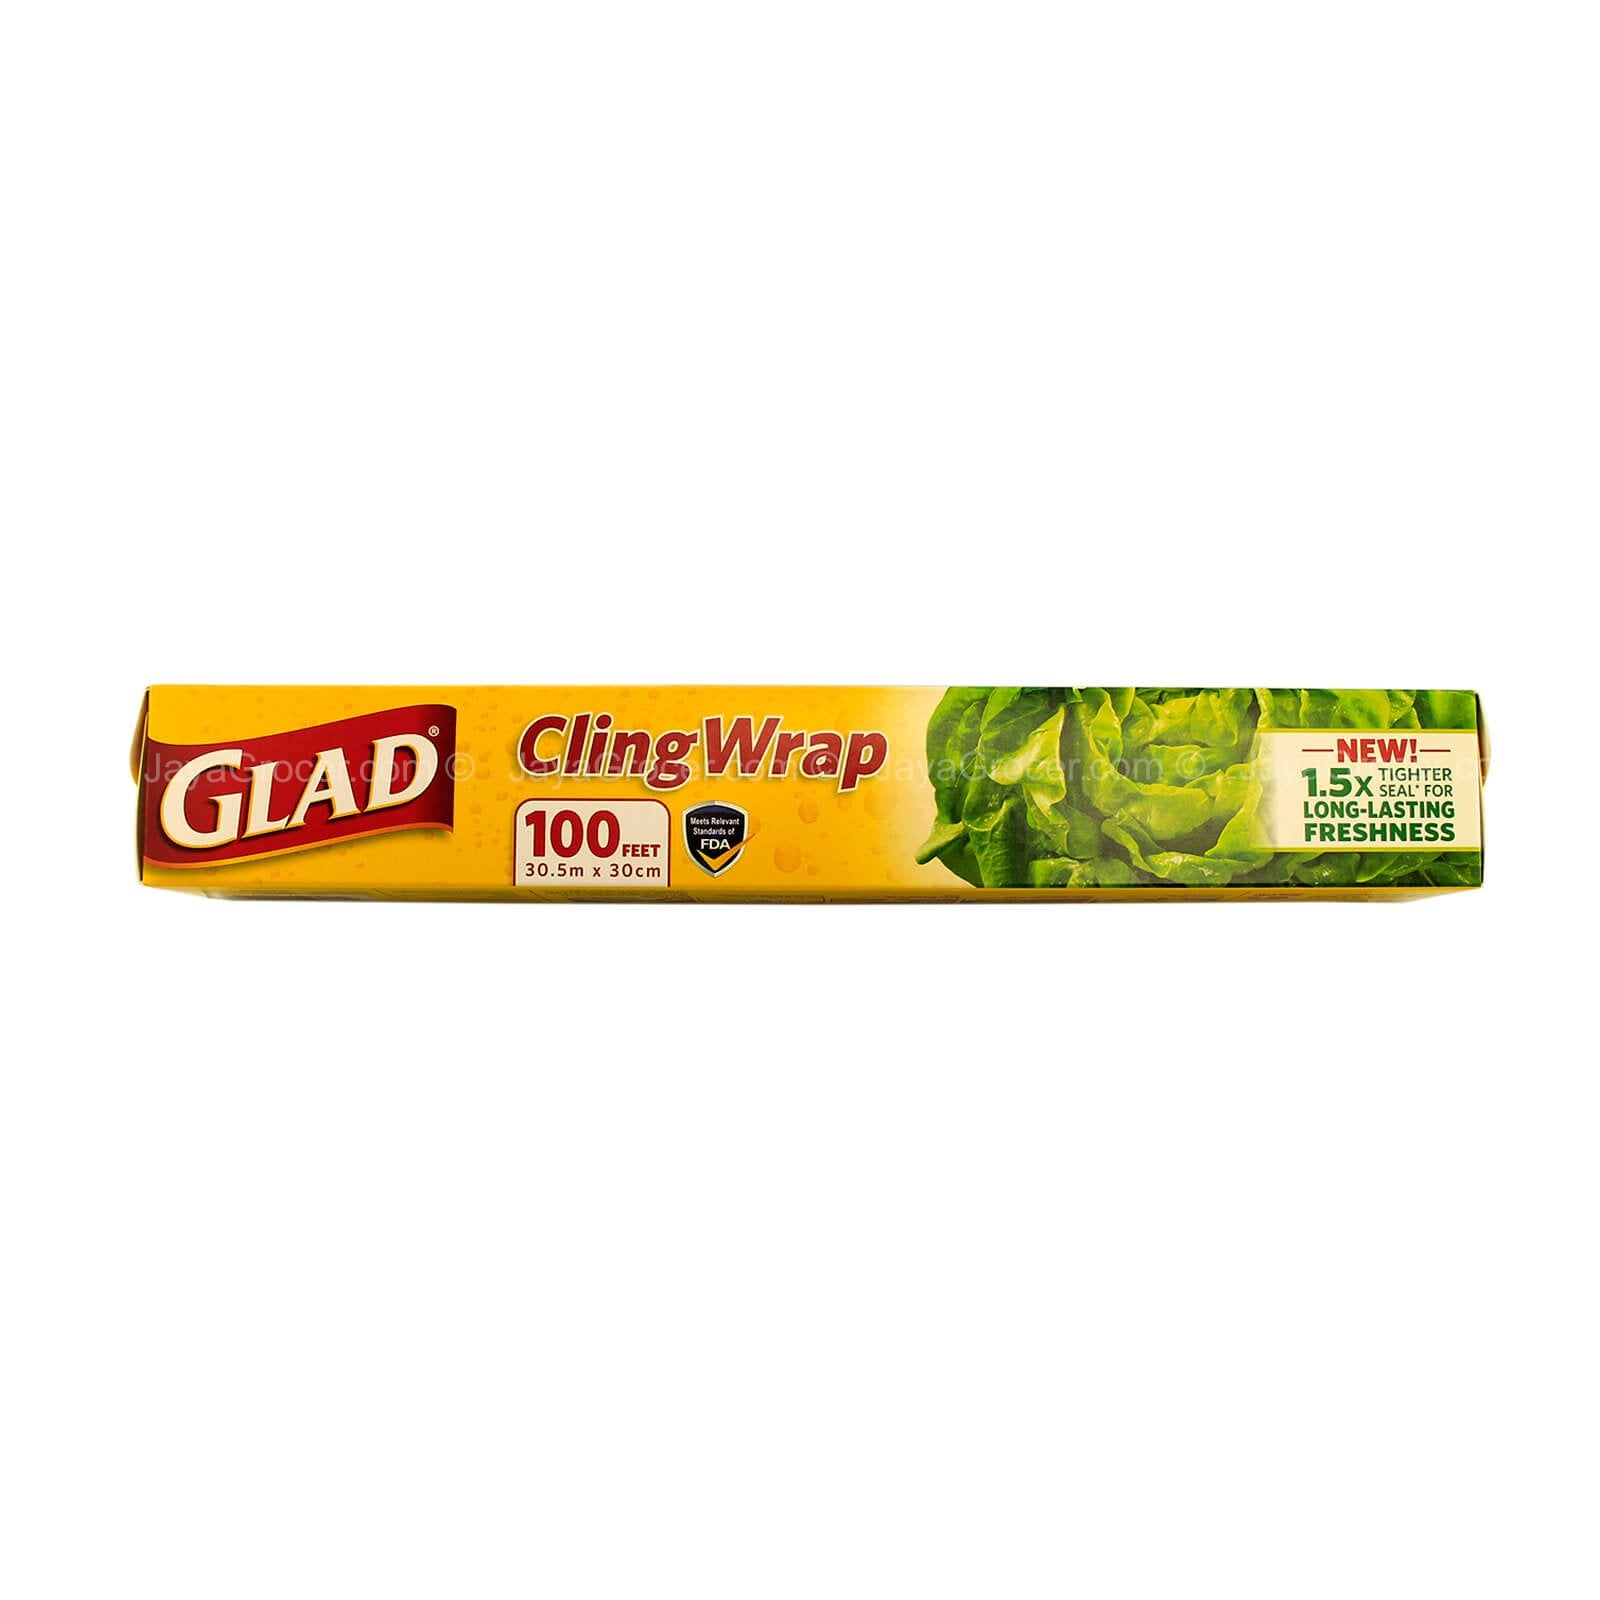 bvi>Glad Cling Wrap - 100 sq ft